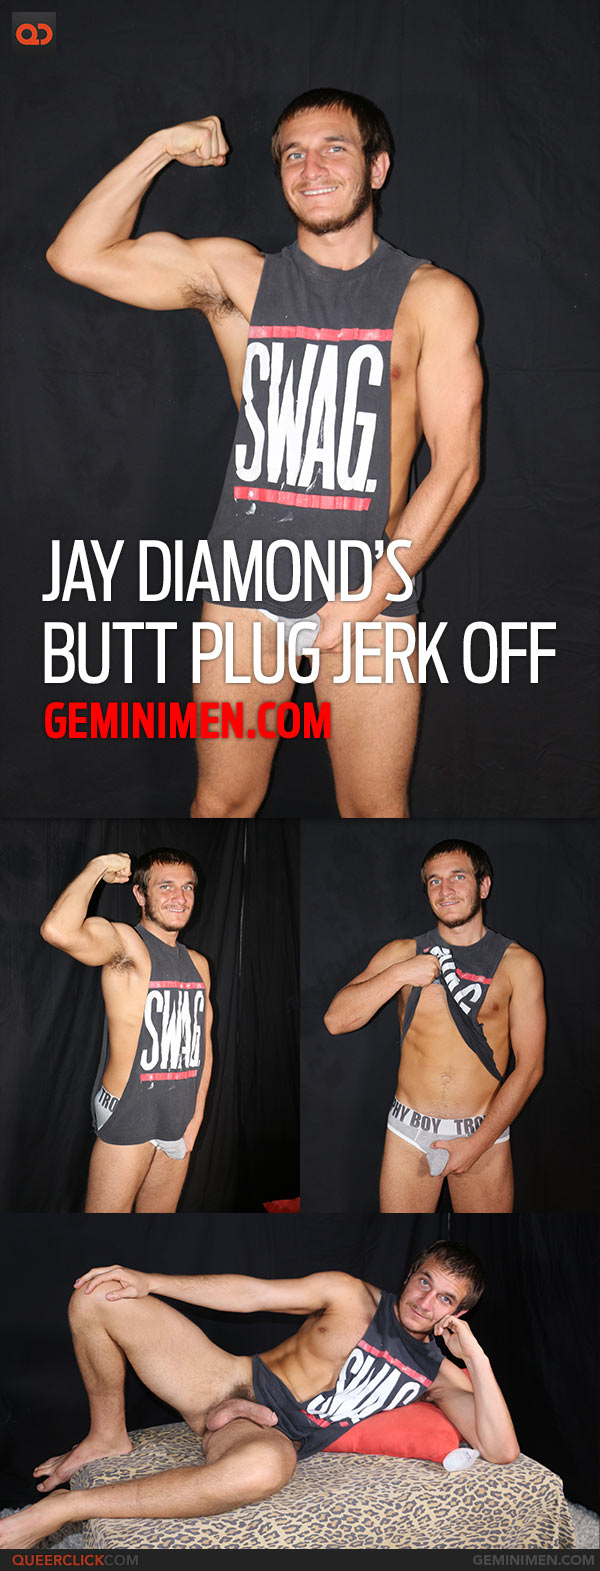 Gemini Men: Jay Diamond’s Butt Plug JO